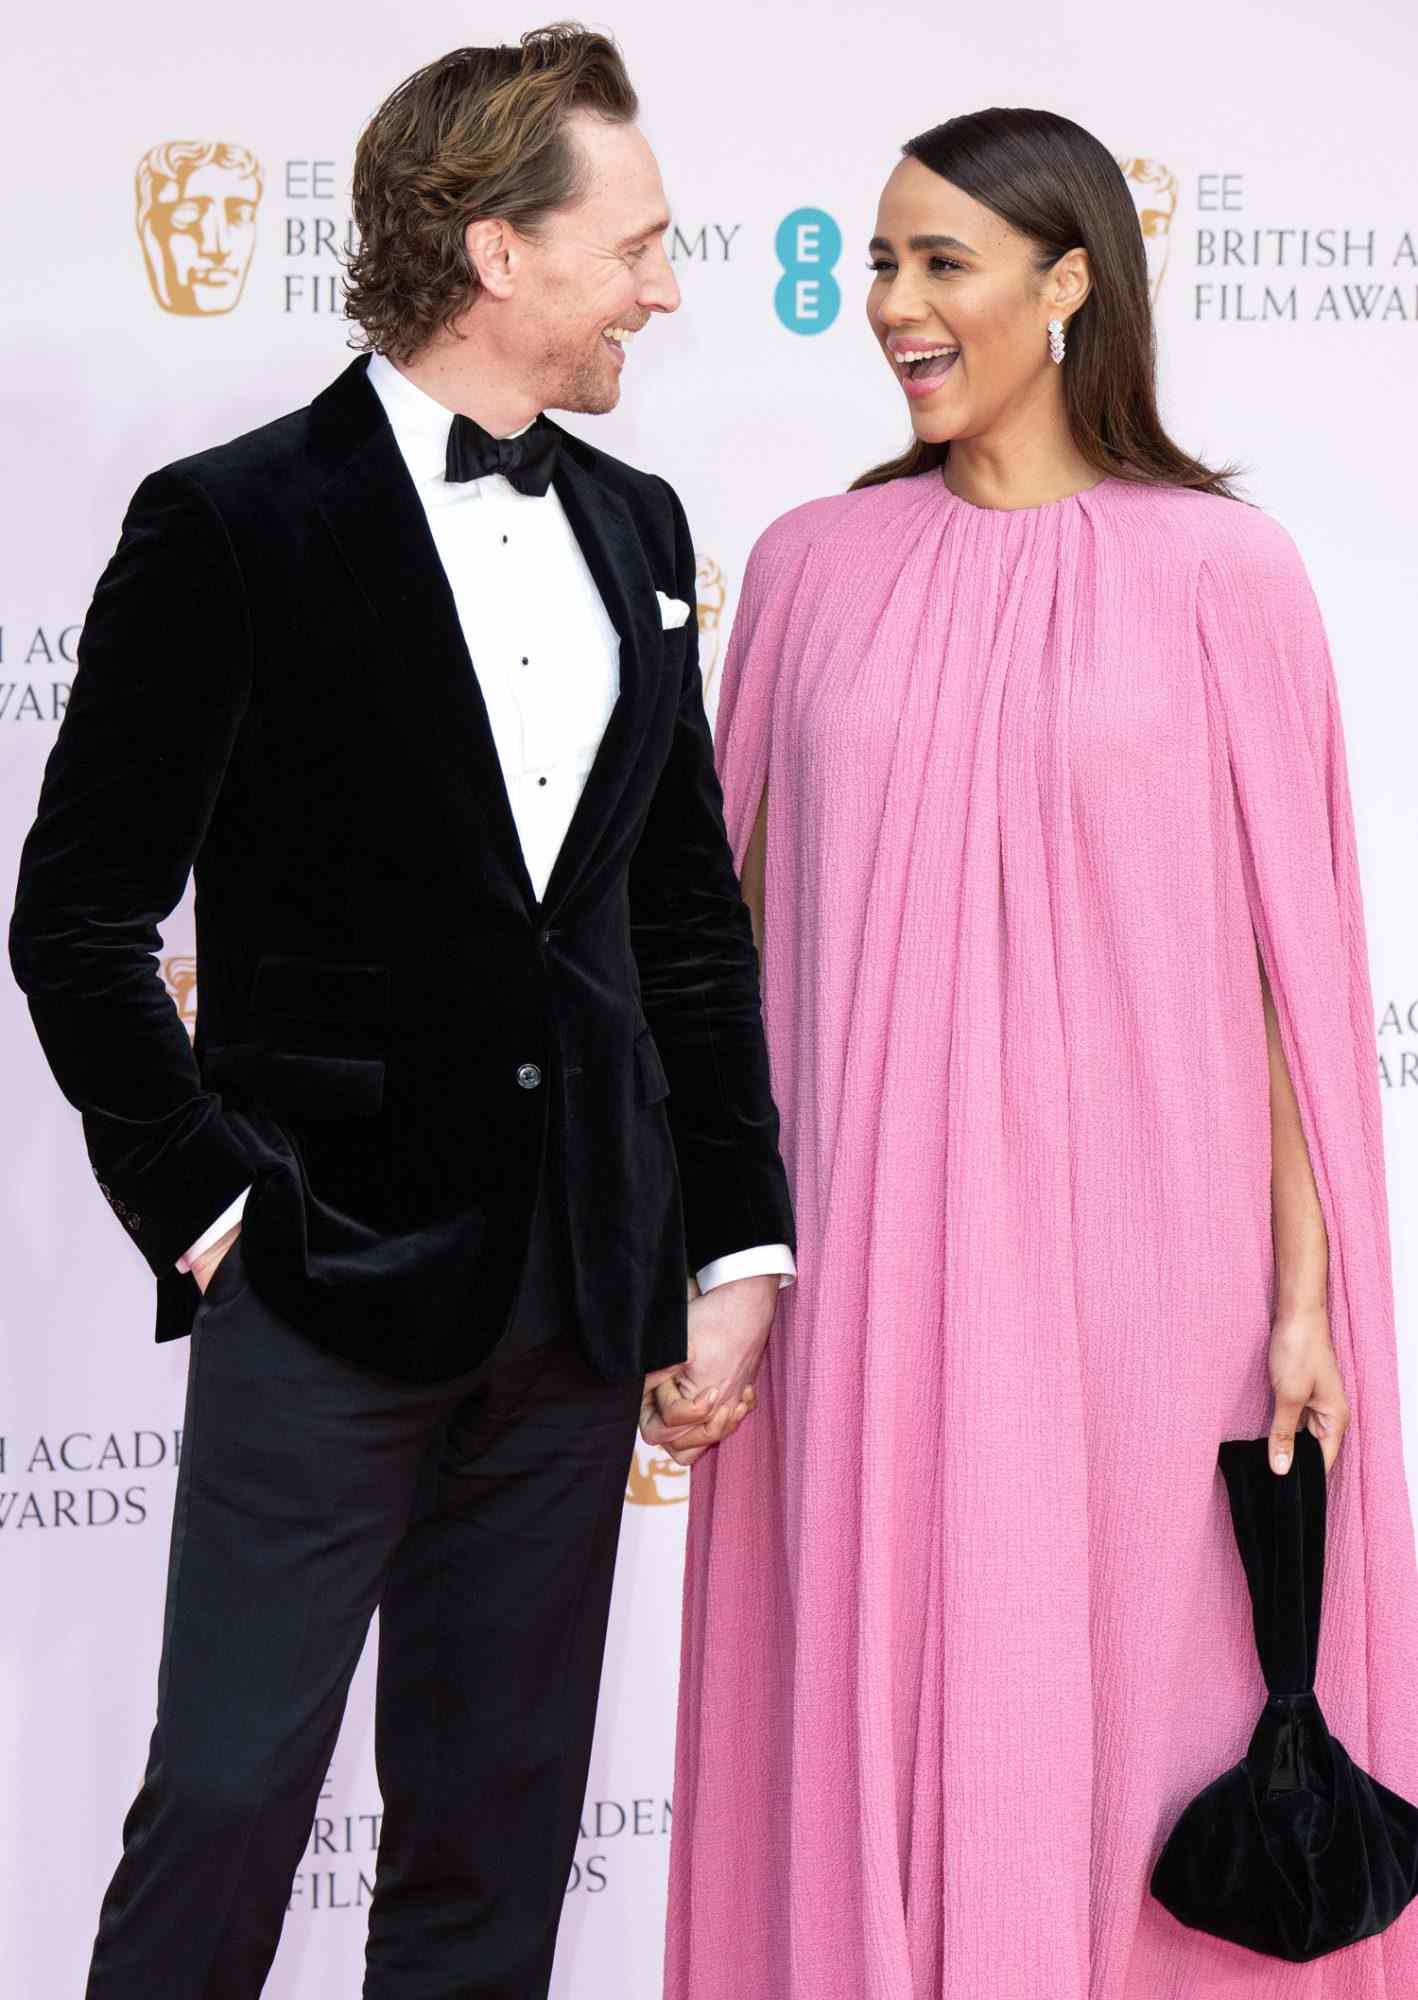 Tom Hiddleston 'Very Happy' with Fiancée Zawe Ashton | PEOPLE.com